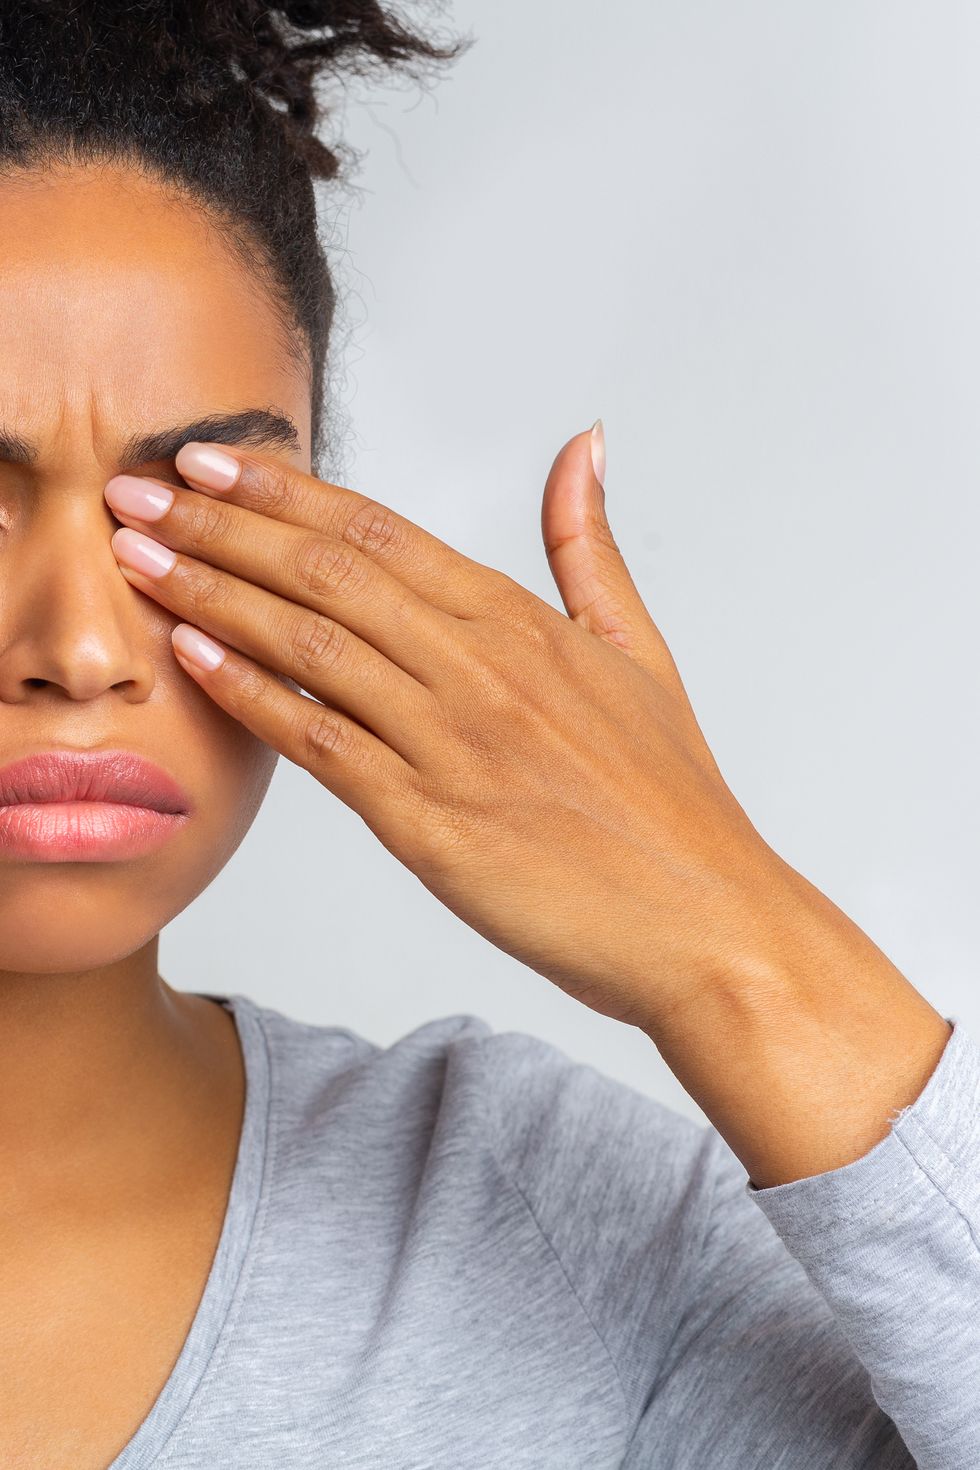 african girl rubs her eye, suffering from conjunctivitis, ocular diseases concept